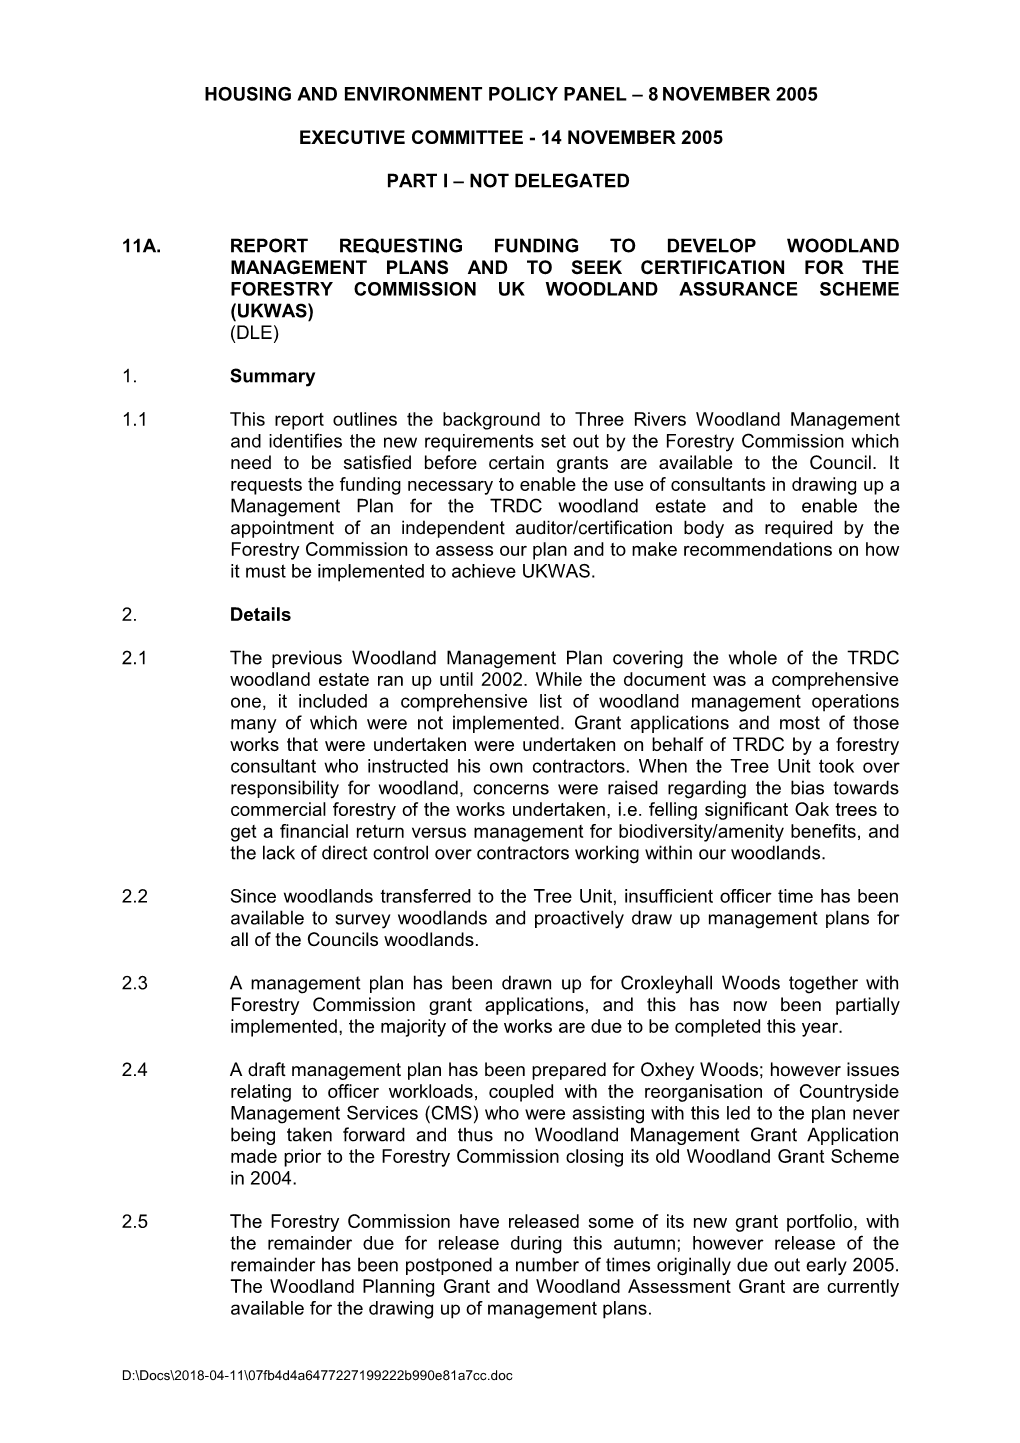 Report: HEPP 08.11.05 & Executive 14.11.05: Part I - (11A) Woodland Management Plans